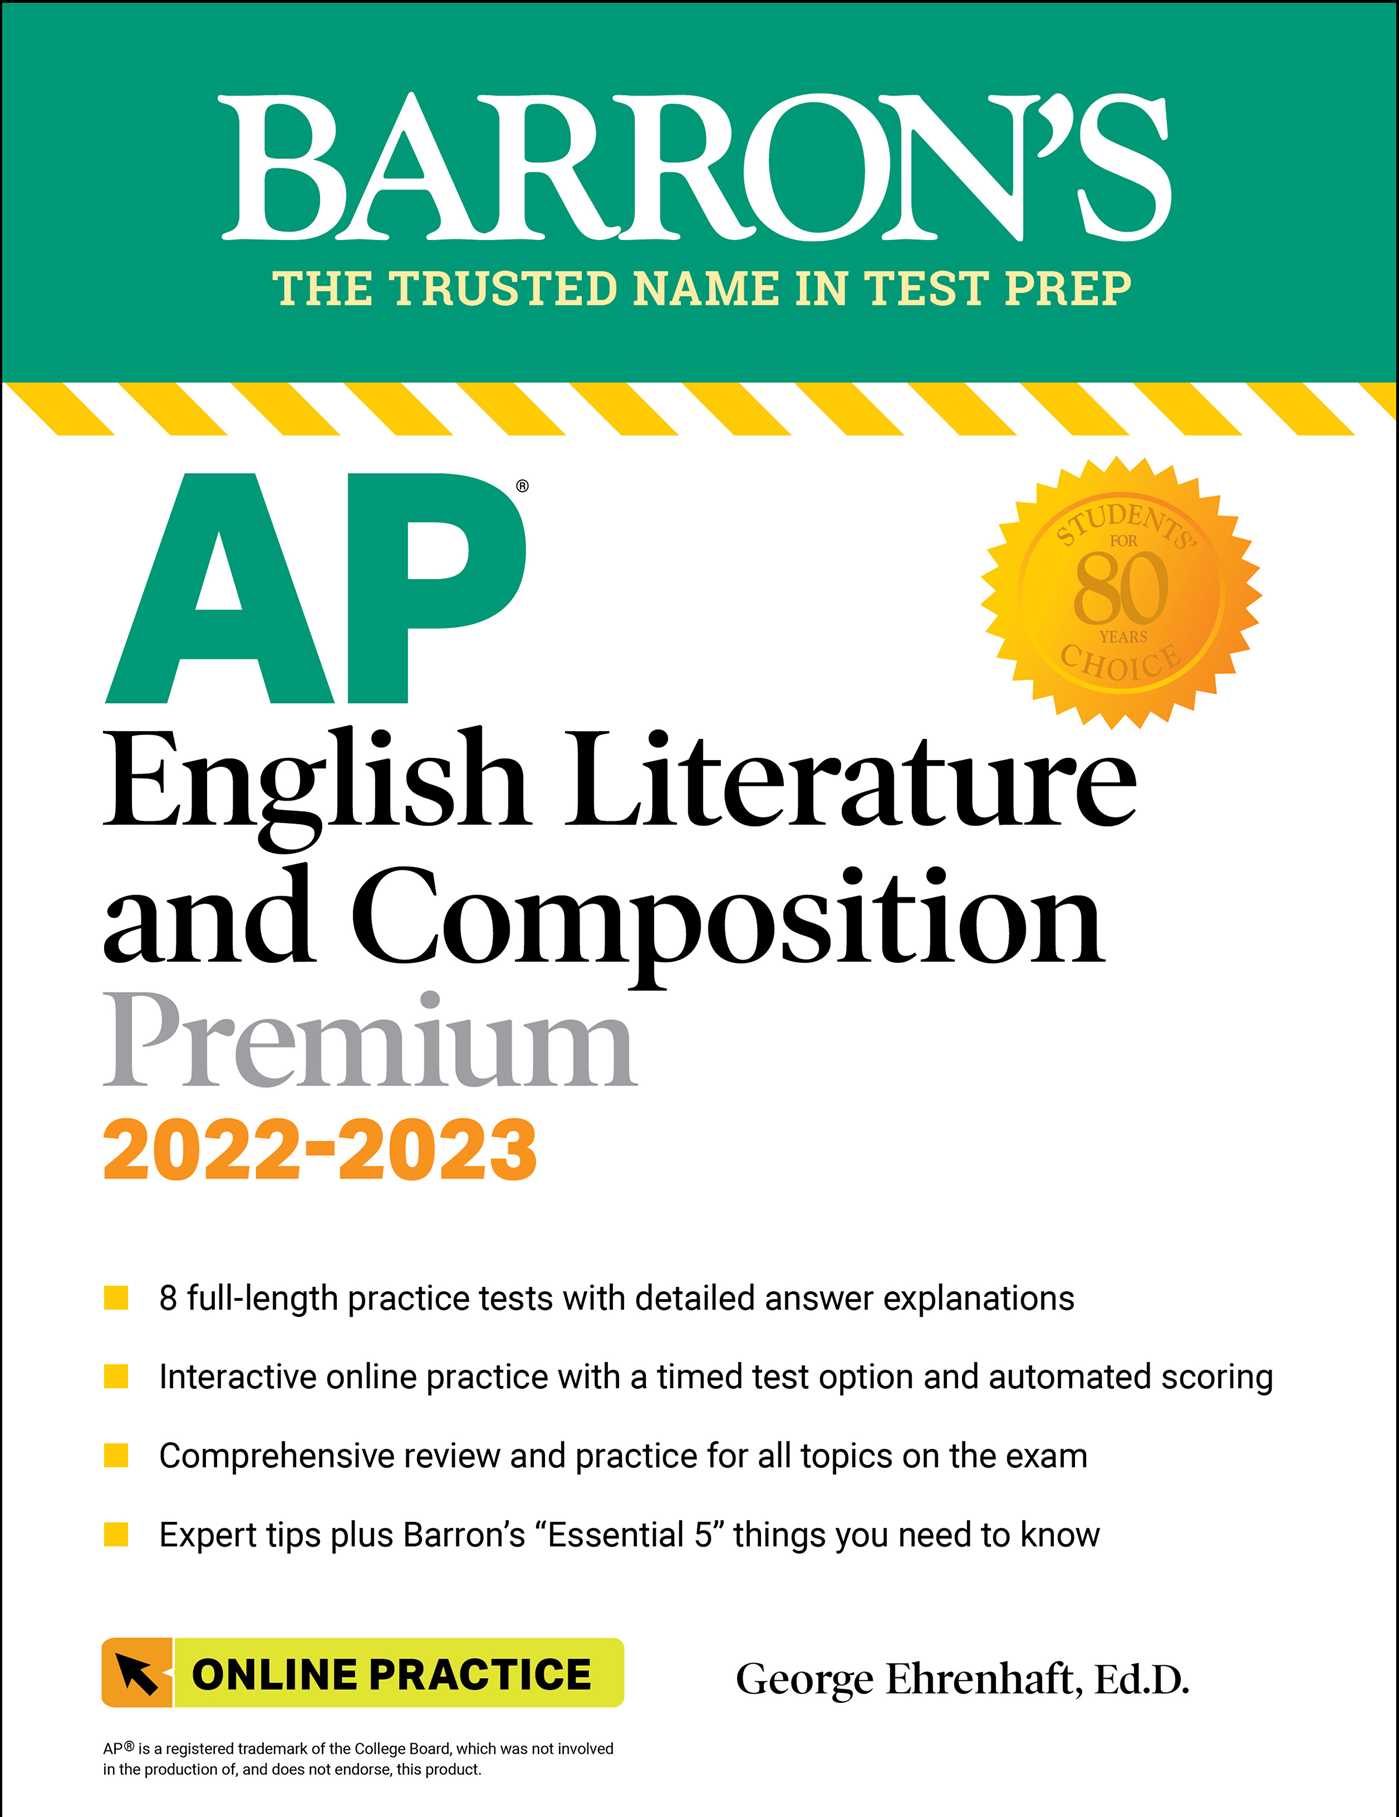 pdf-ebook-barrons-ap-english-literature-and-composition-premium-2022